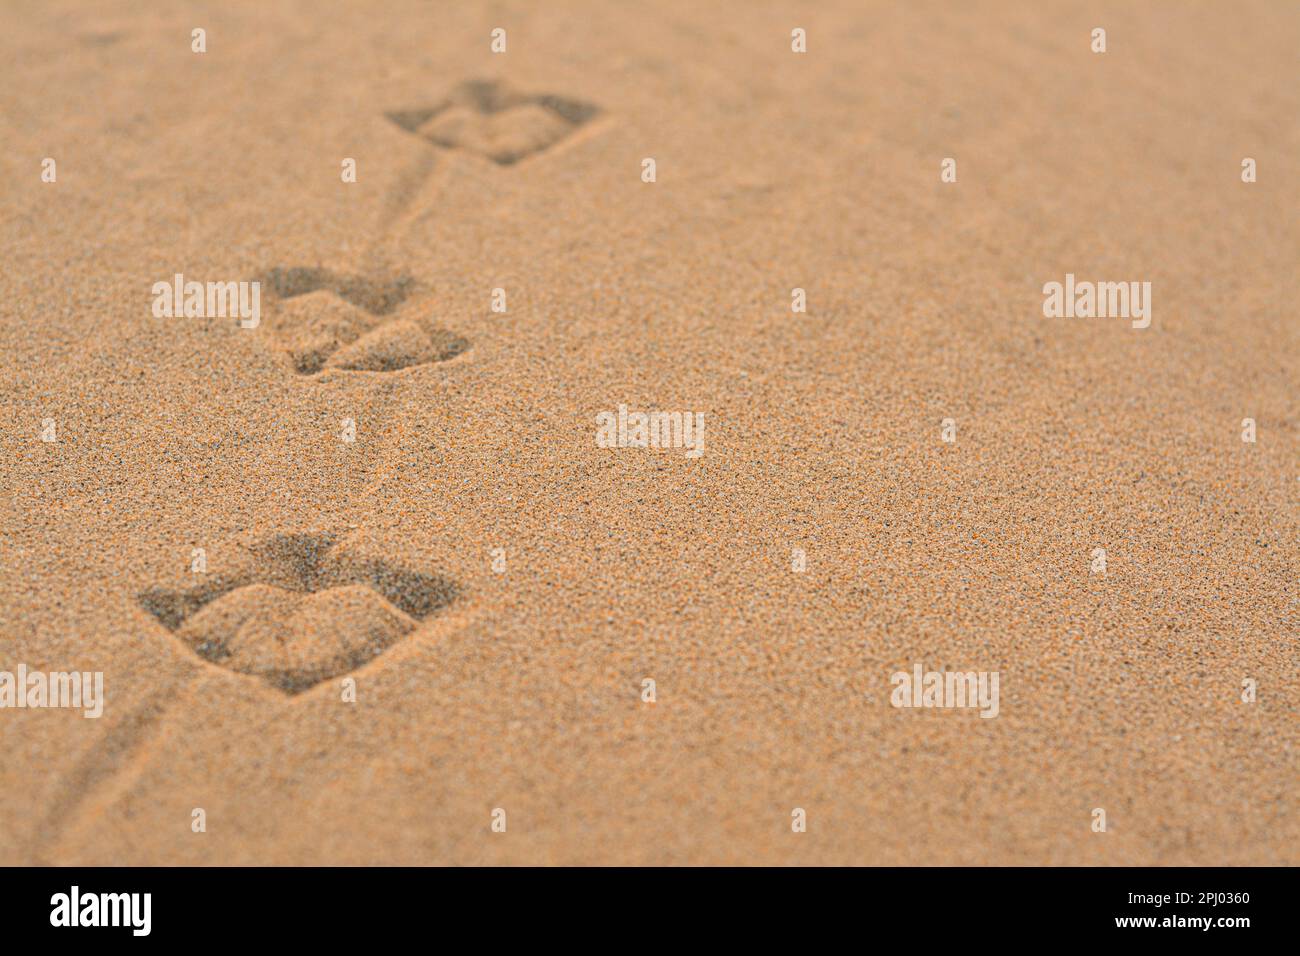 Bird tracks on beach sand, closeup. Space for text Stock Photo